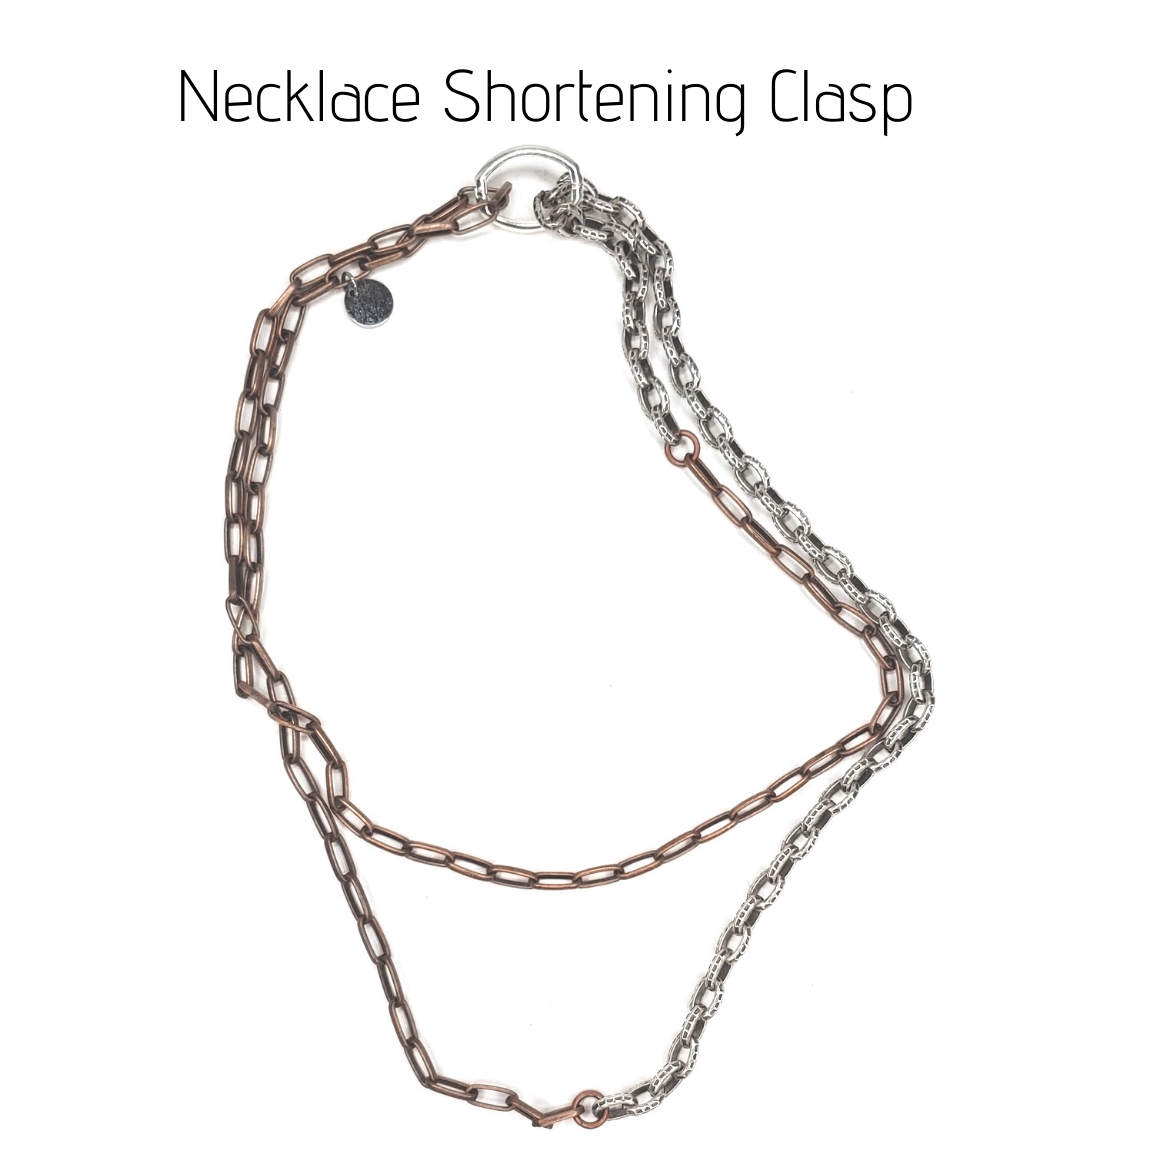 Necklace Shortening Clasp